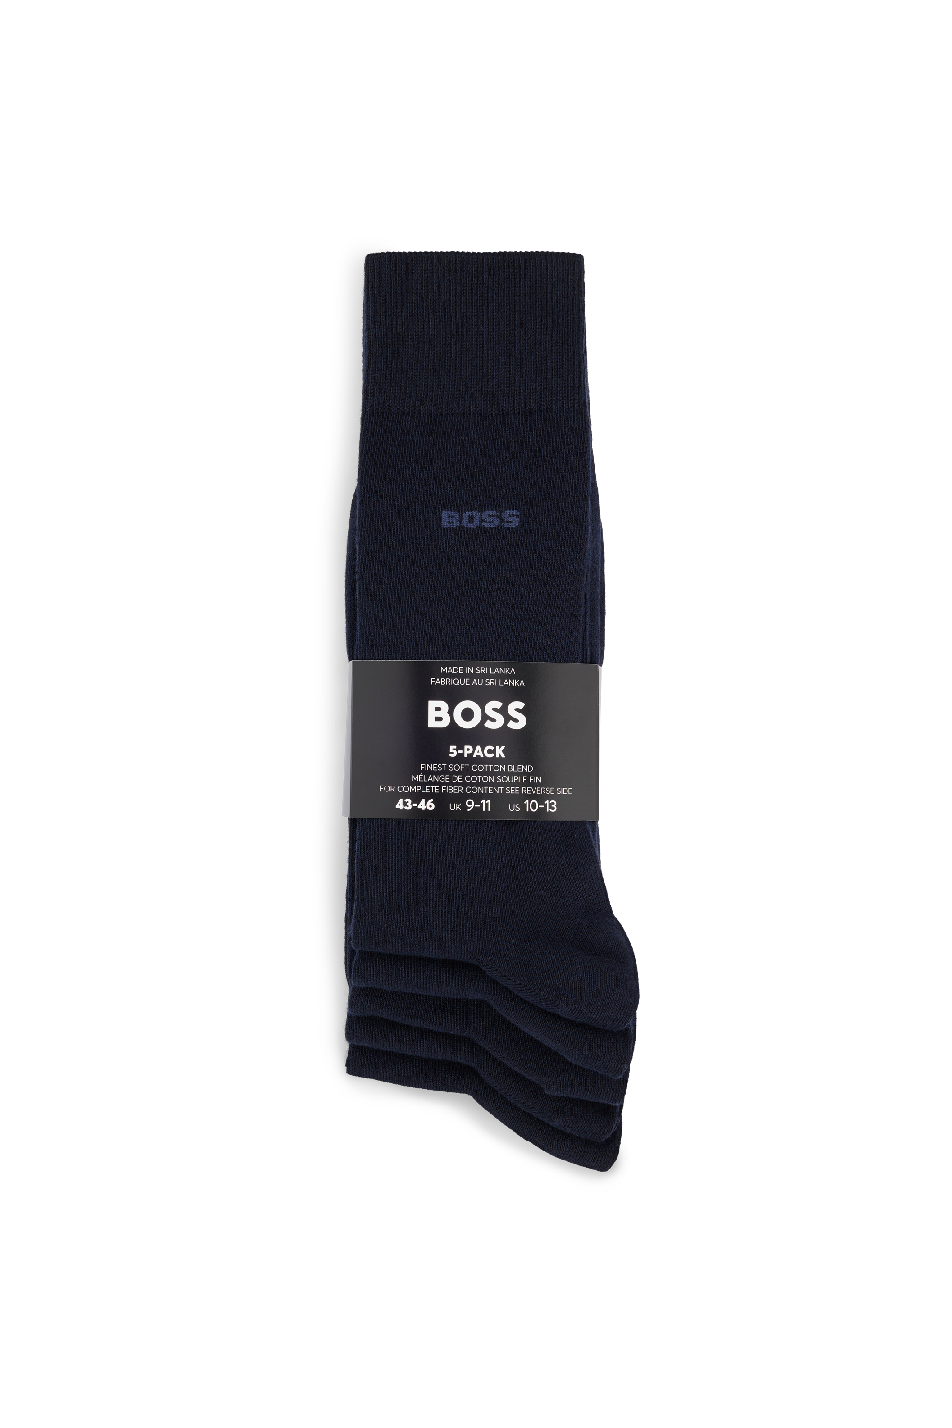 Boss 5 Pack RS Crew Sock